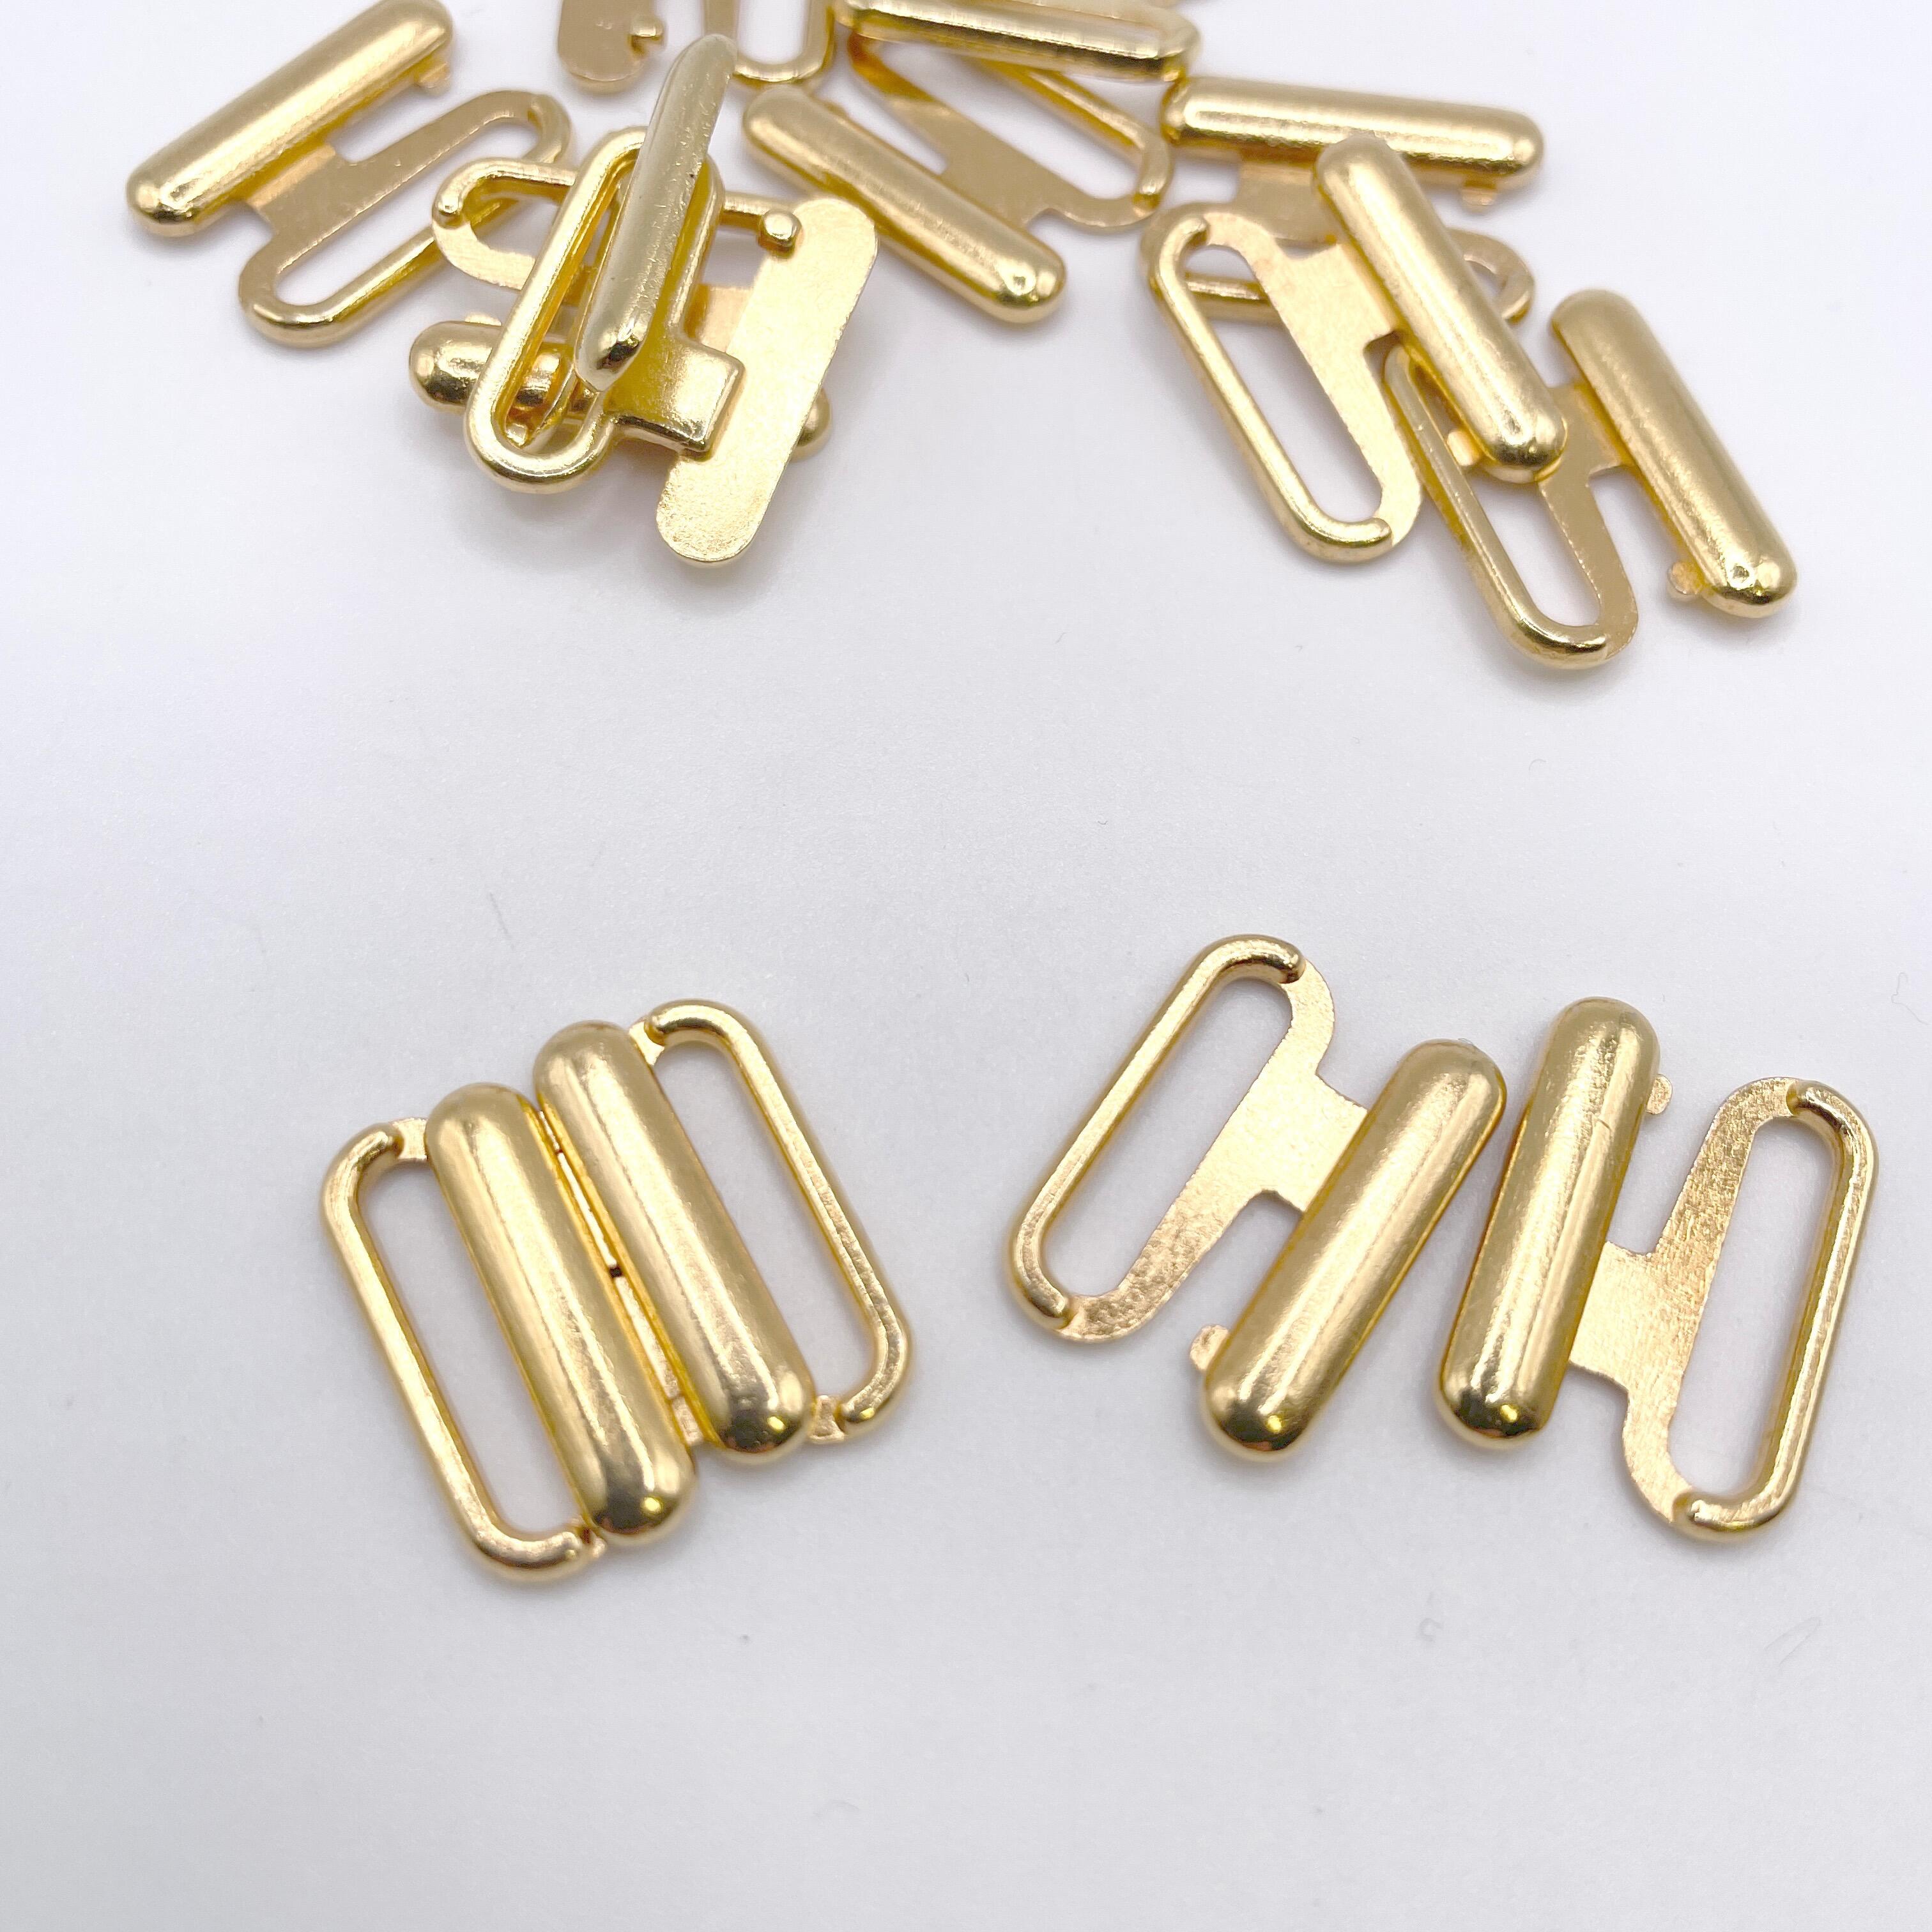 Fastener - Bikini/Sports Bra Front/Back Clip - 15mm, GOLD coloured METAL,  each